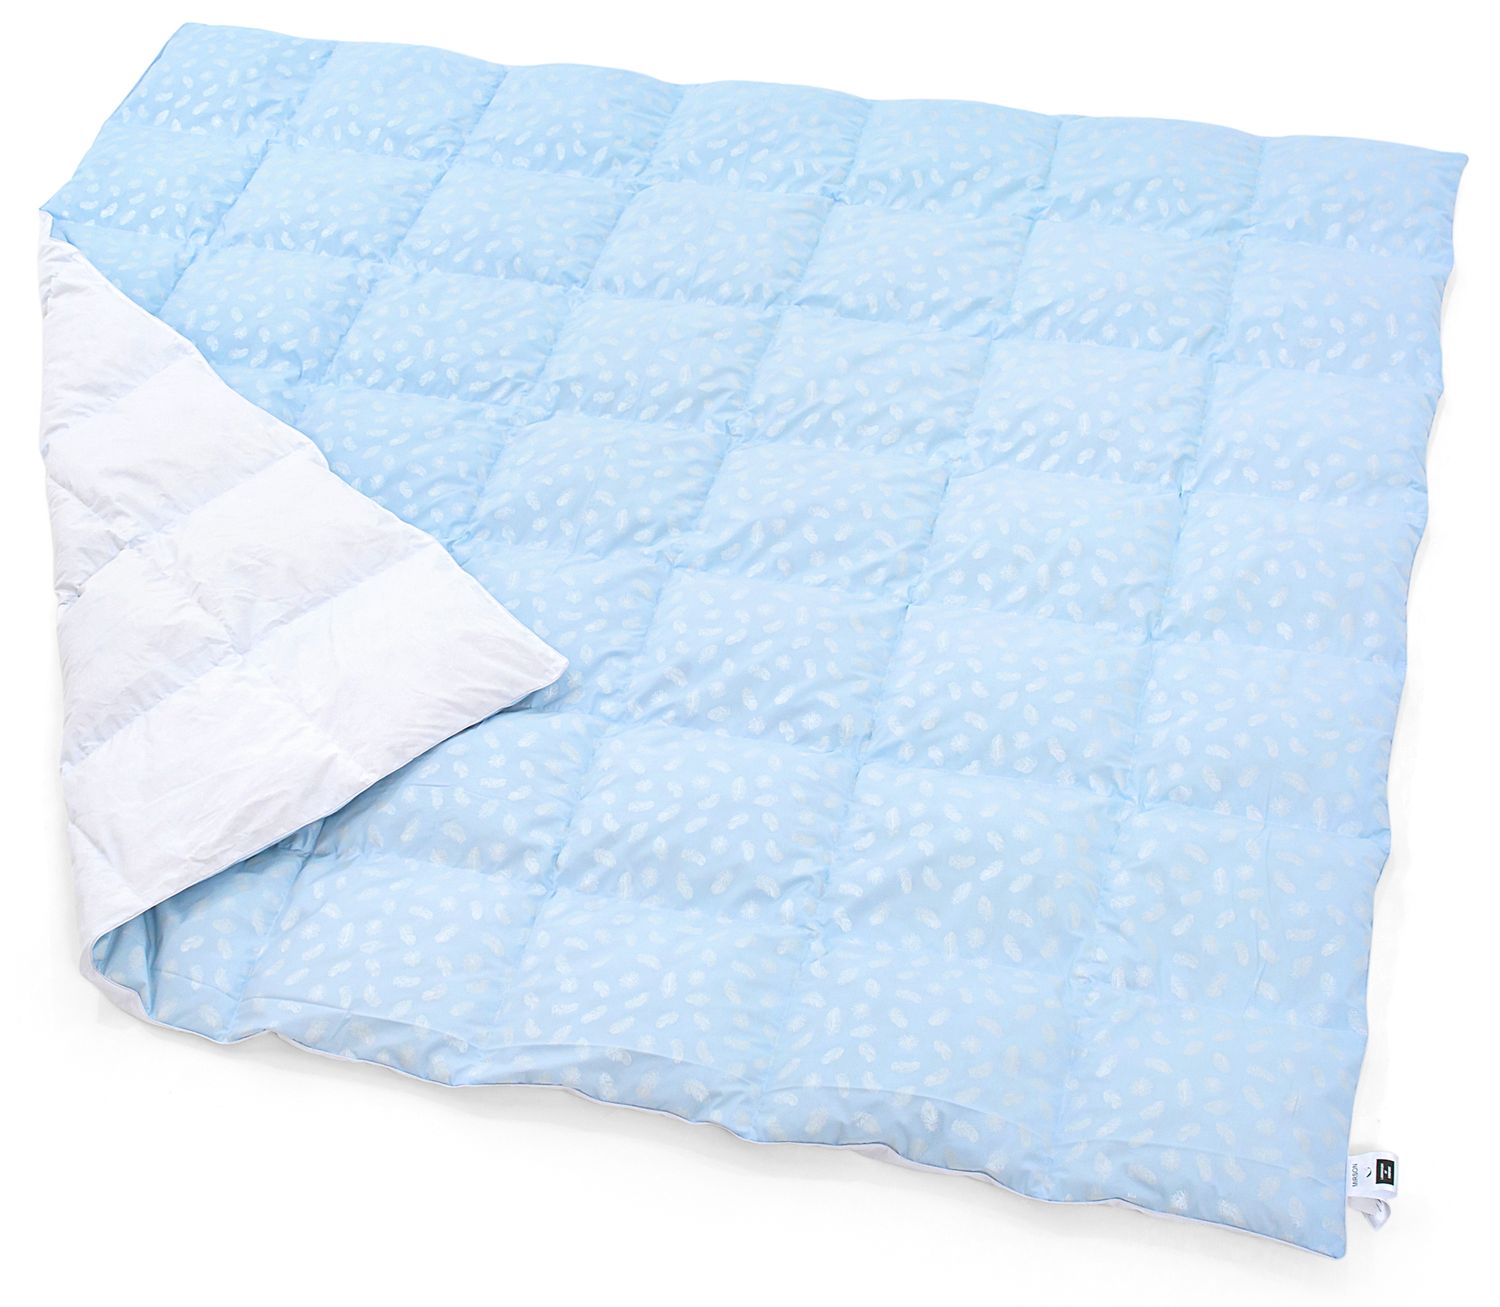 Одеяло пуховое MirSon Karmen №1840 Bio-Blue, 70% пух, евростандарт, 220x200, голубое (2200003013641) - фото 2